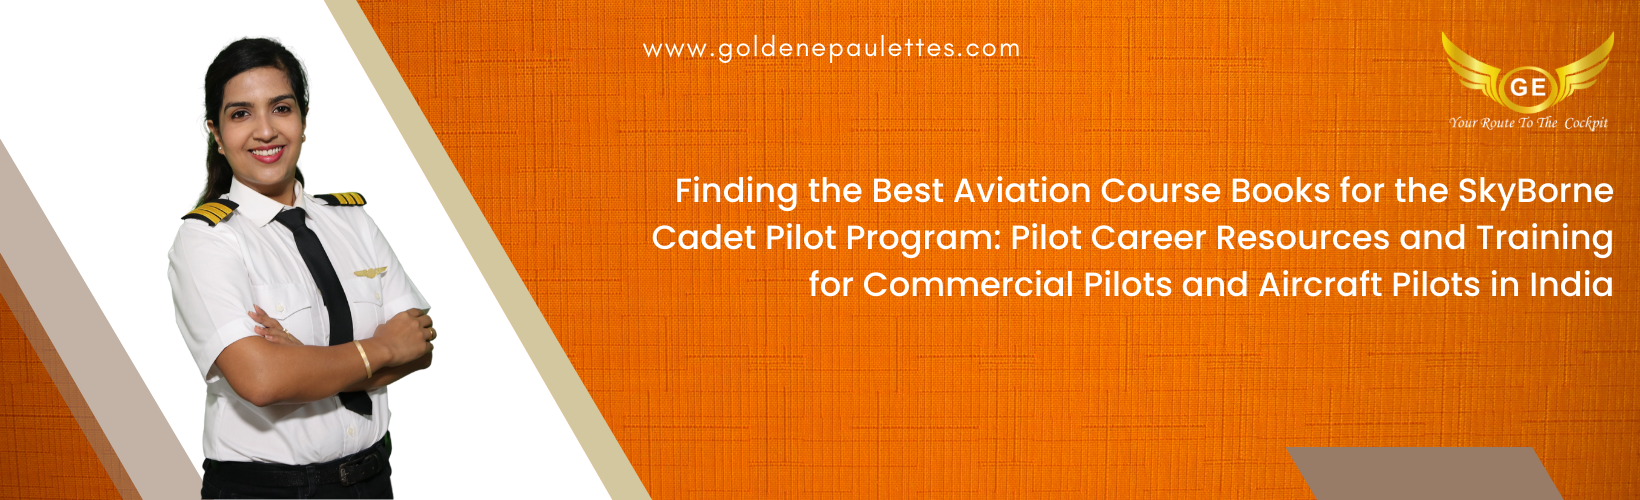 Finding the Best Aviation Course Books for the SkyBorne Cadet Pilot Program